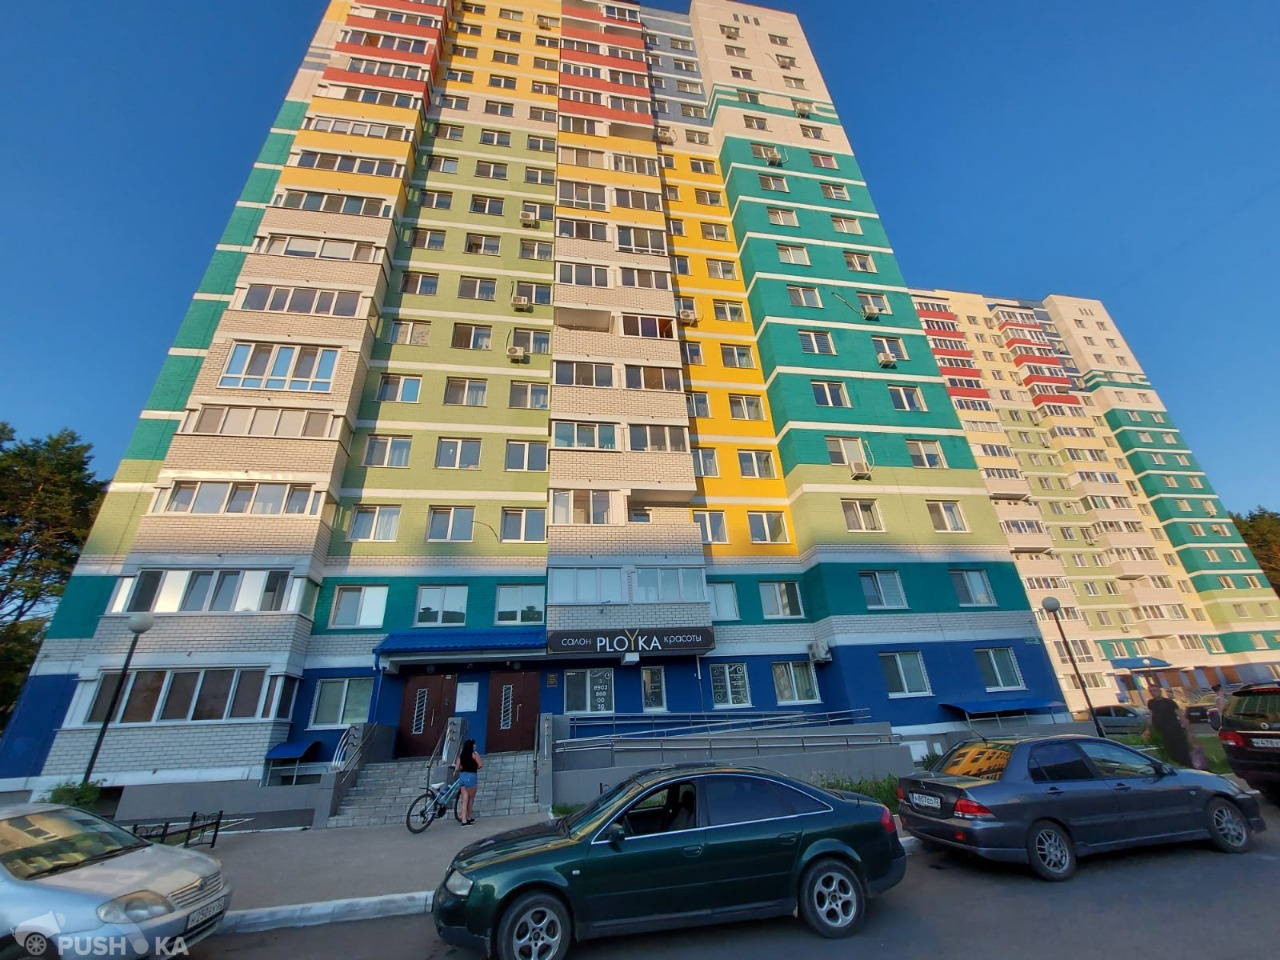 Продаётся 2-комнатная квартира 58.7 кв.м. этаж 11/16 за 3 800 000 руб 